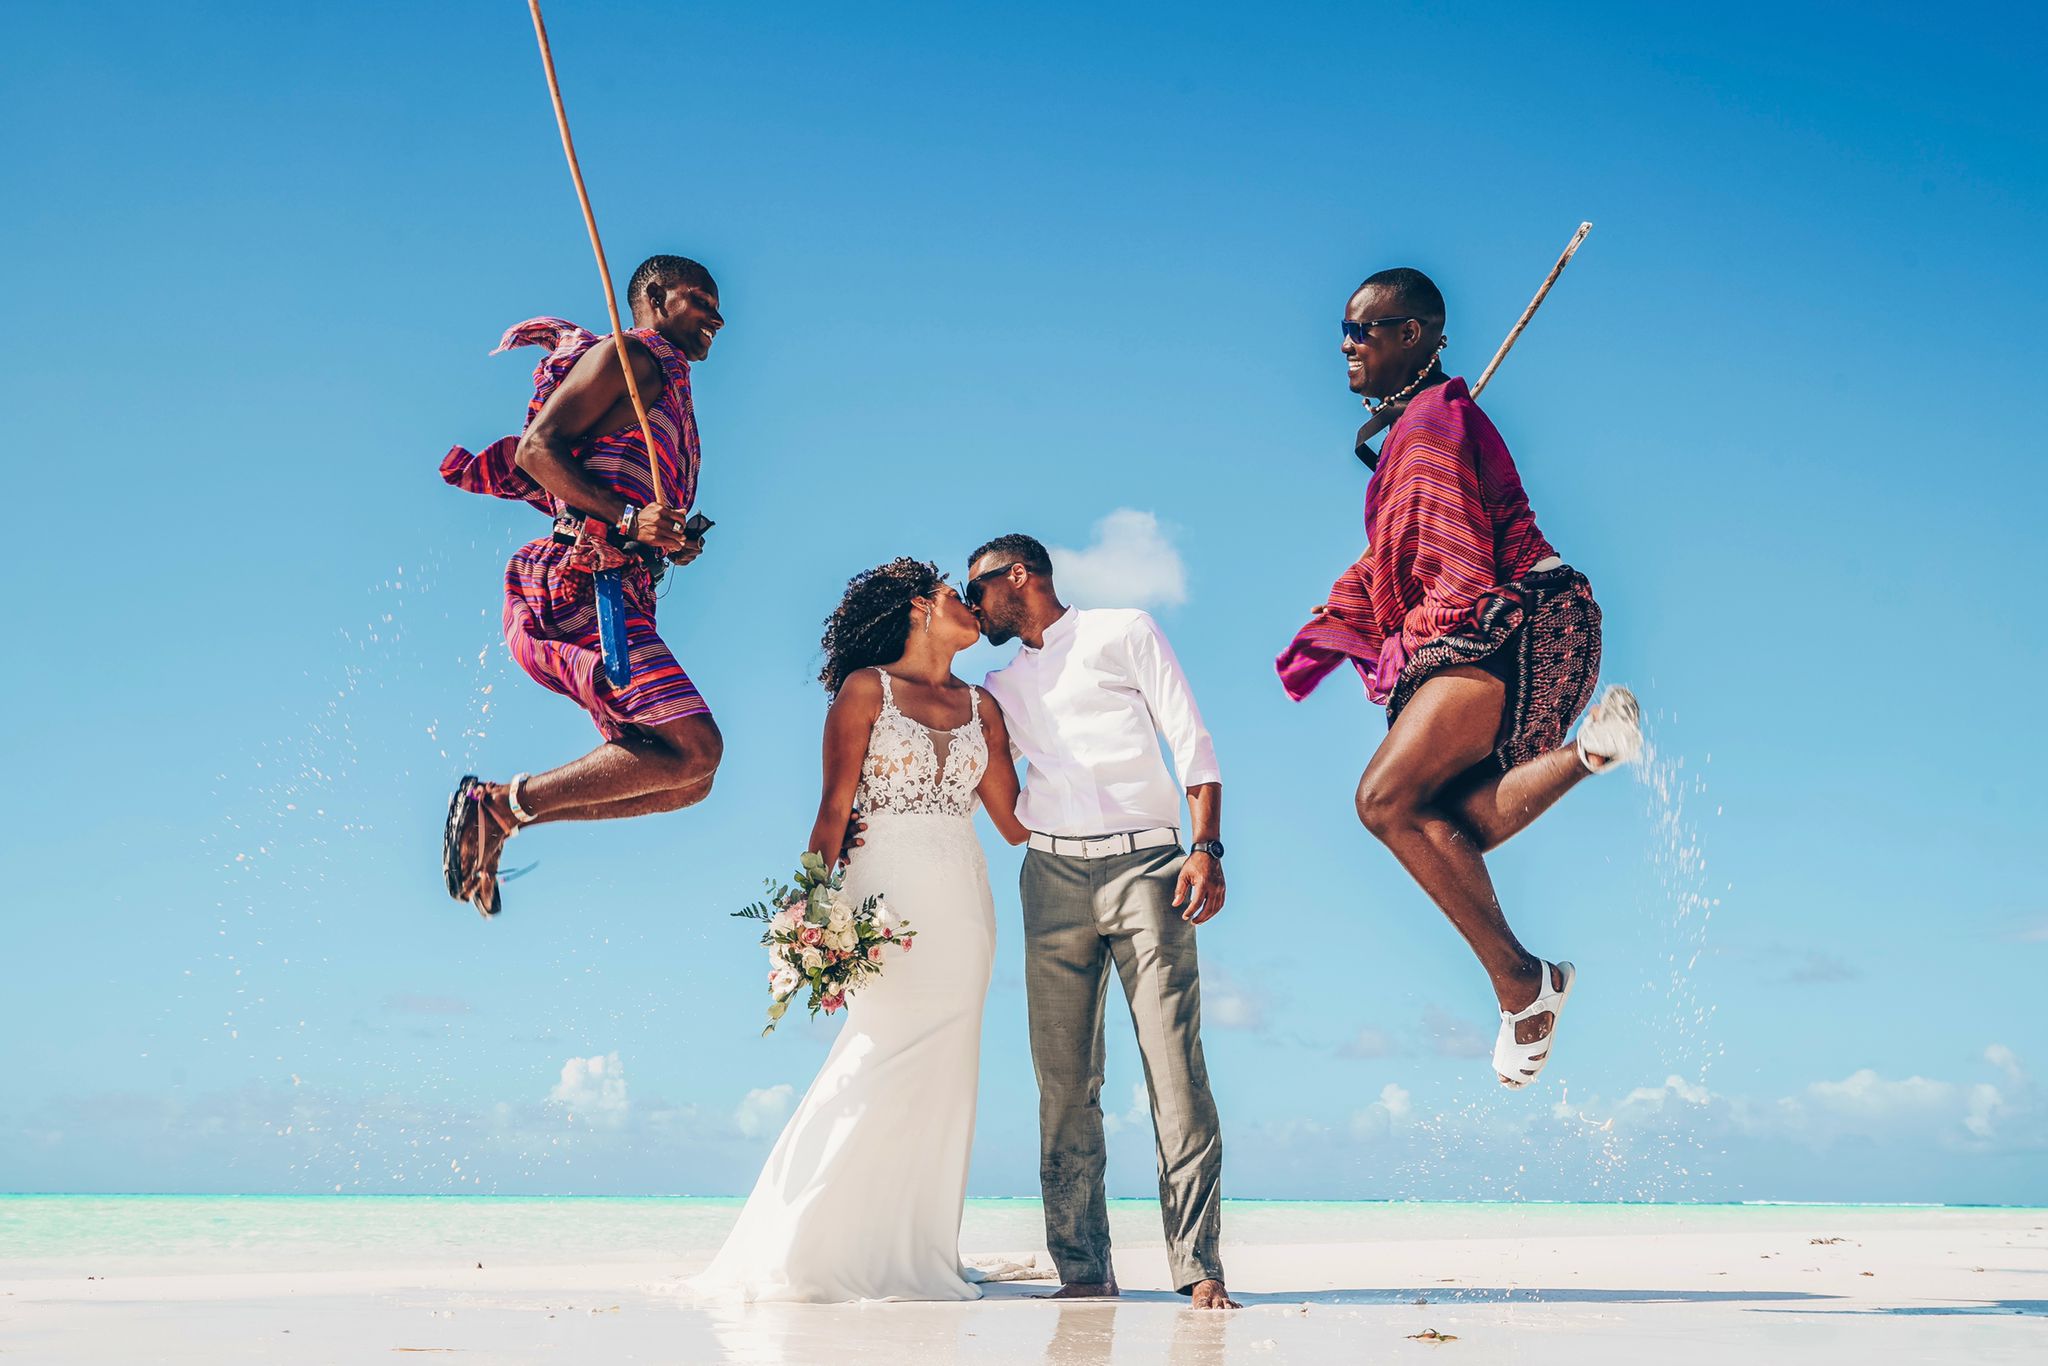 Destination Wedding at Villa Bluu on Zanzibar Island 5